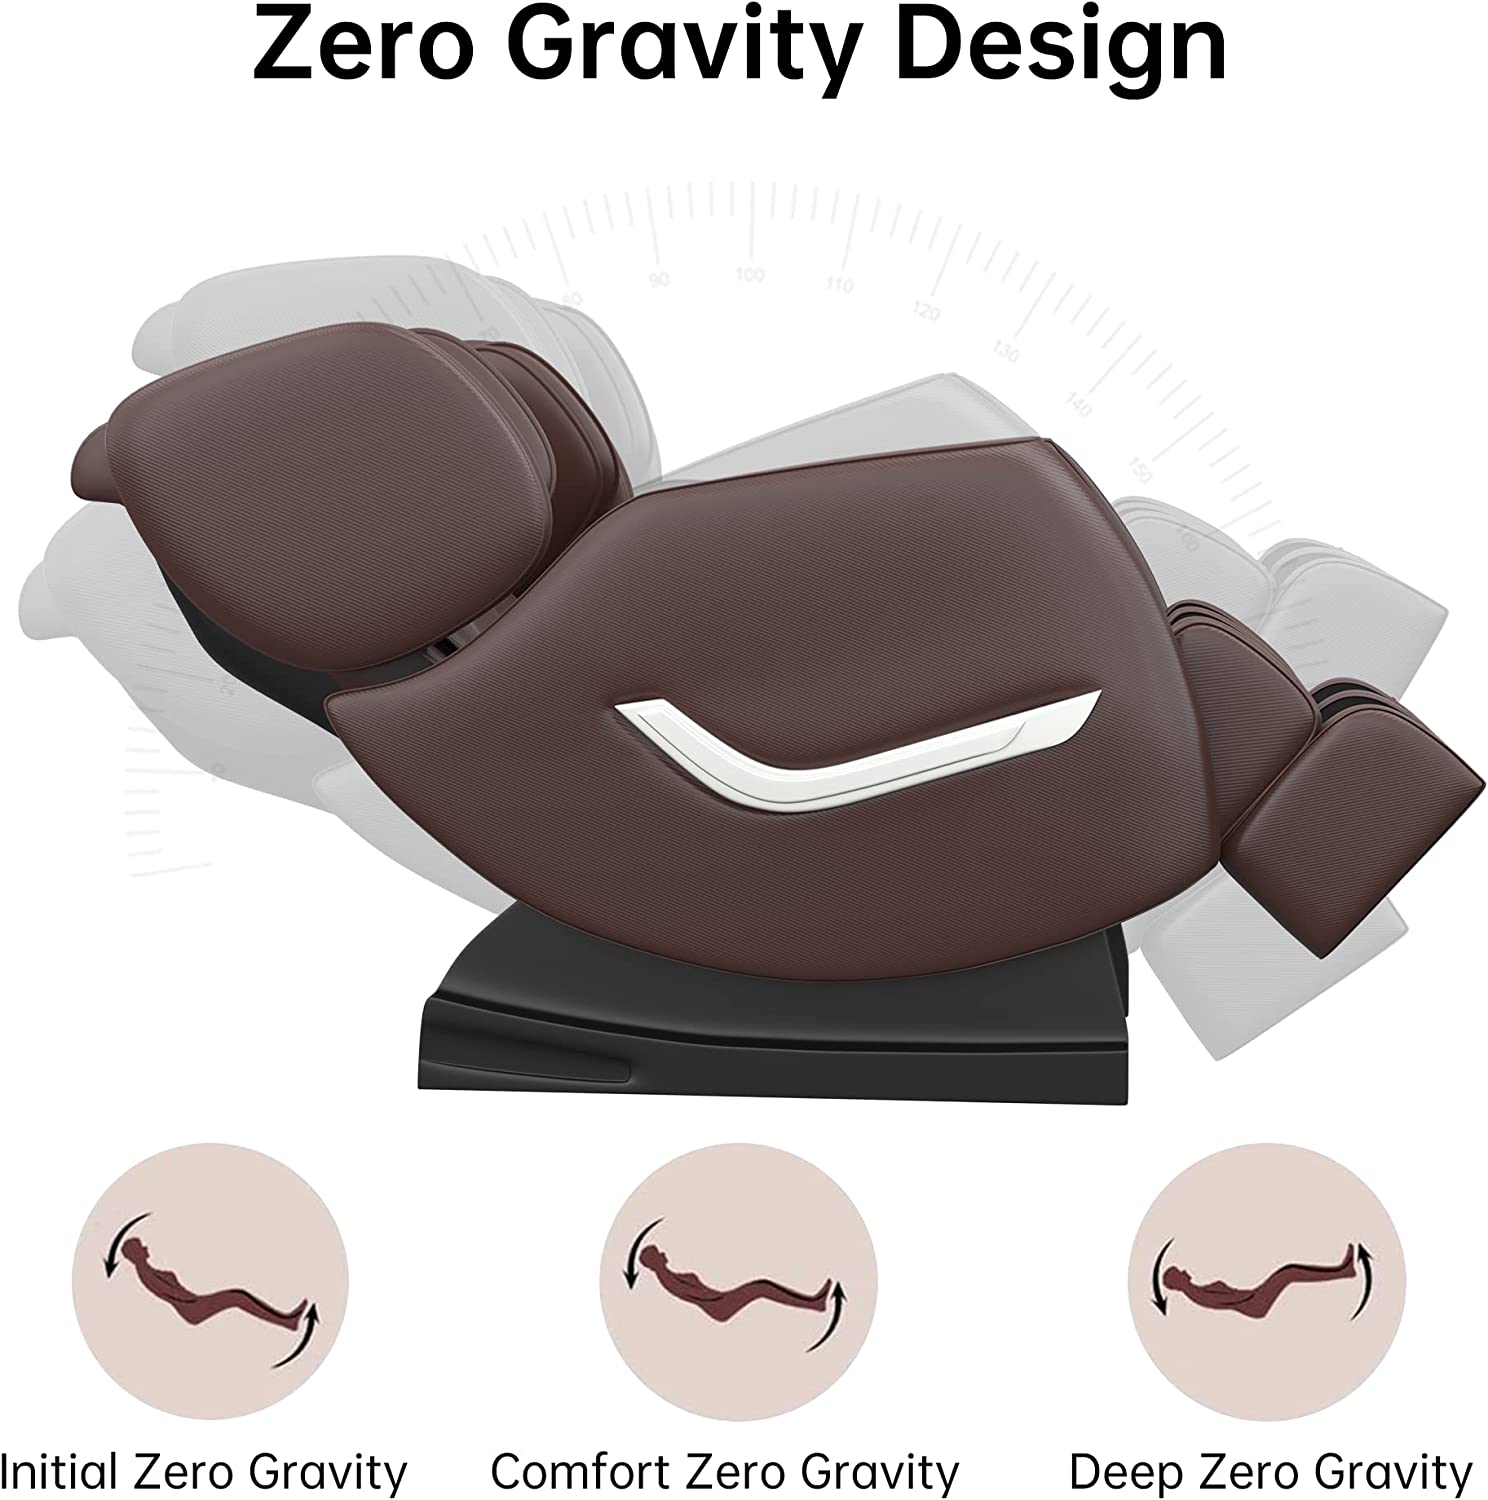 Gravity Relax Heated Massager